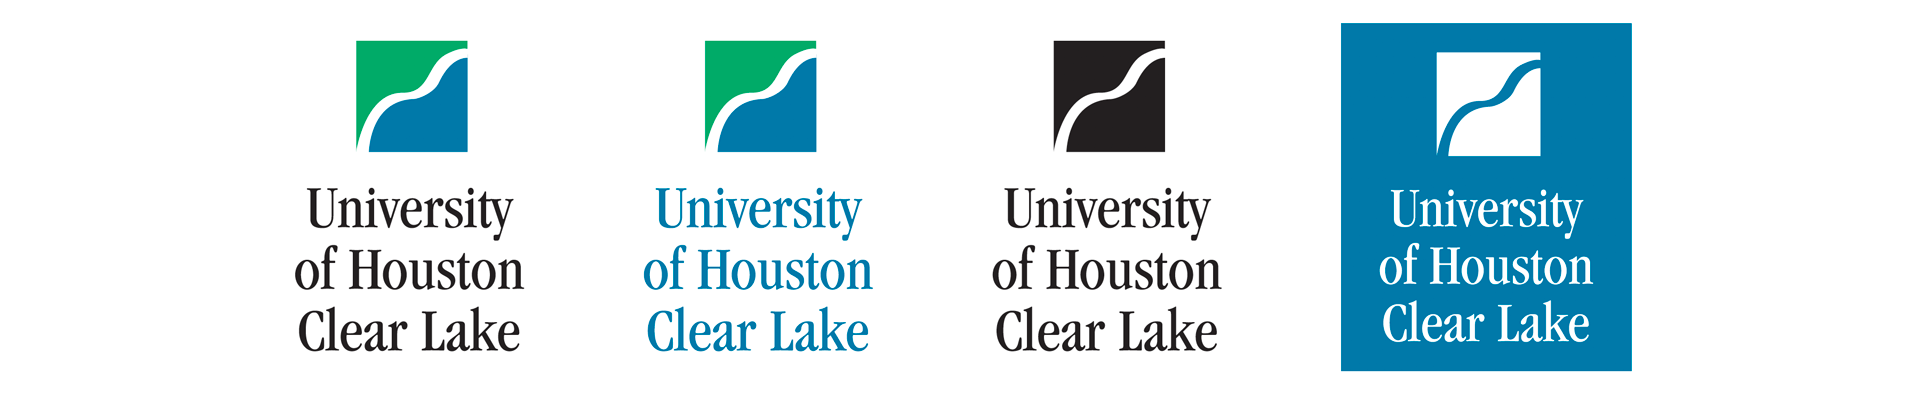 uhcl main logo examples